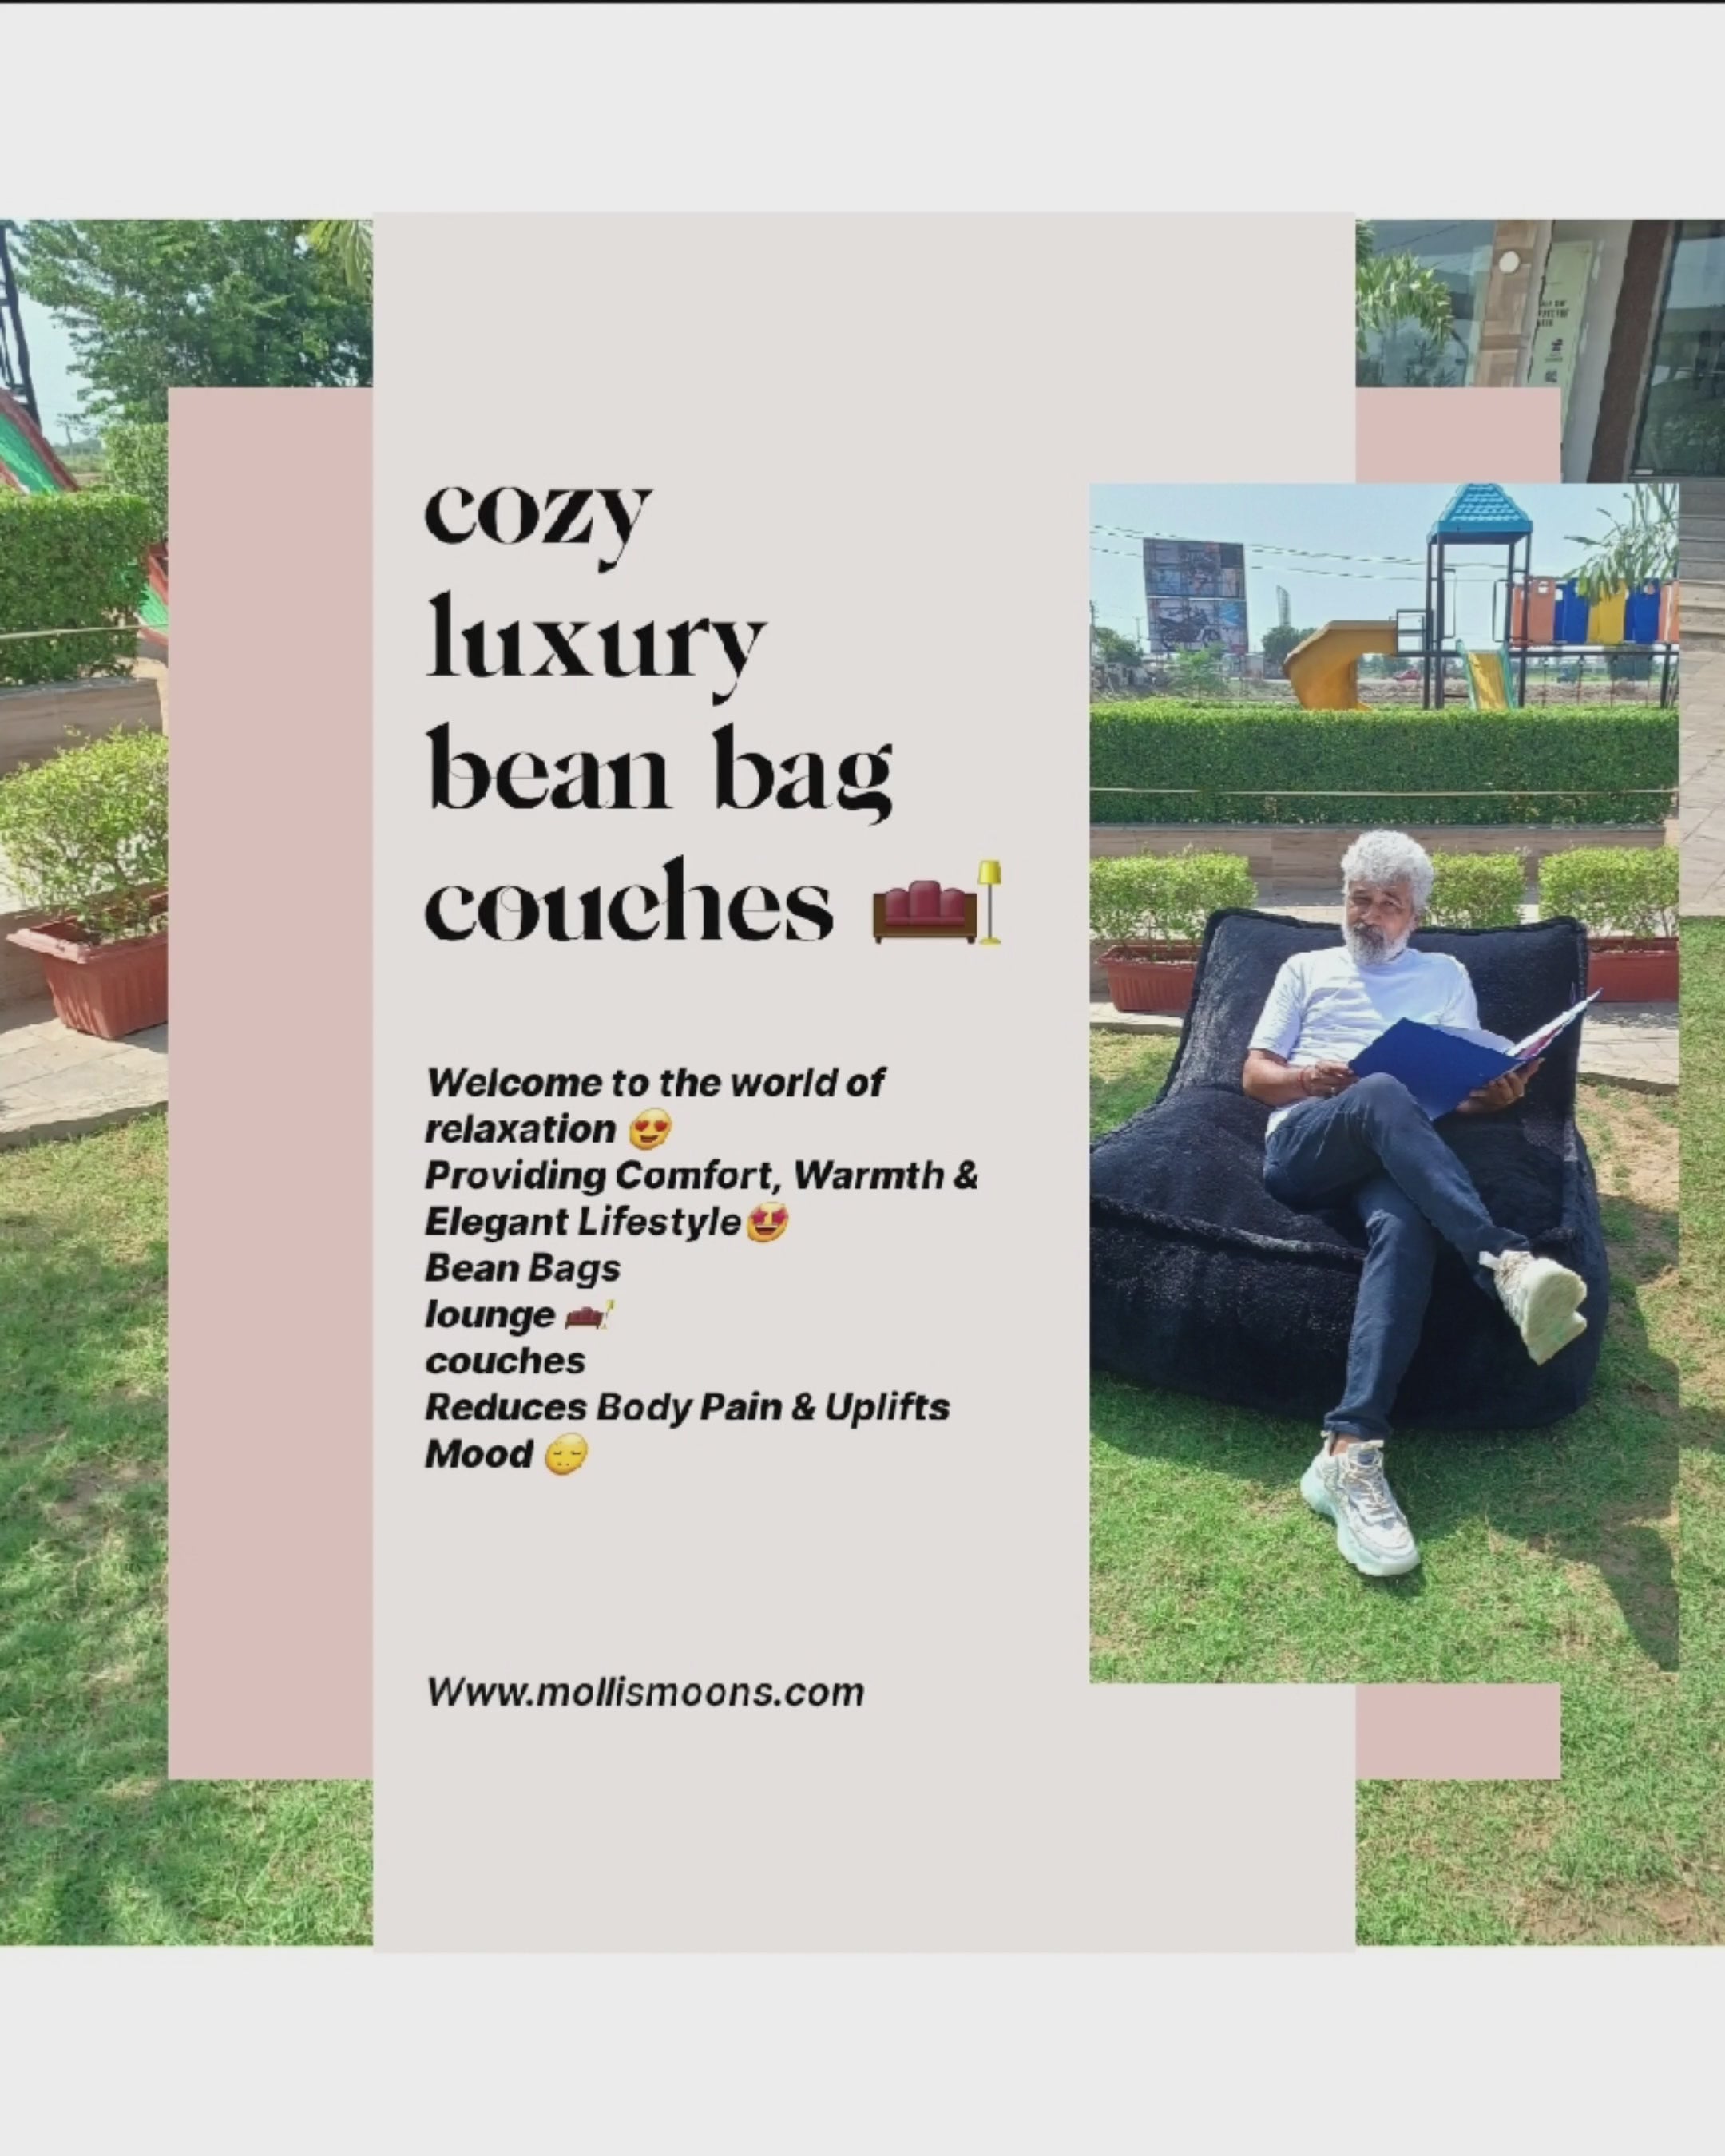 Single Seat Waterproof Bean Bag Chair Luxury PU Leather Beanbag - China  Bean Bag, Beanbag